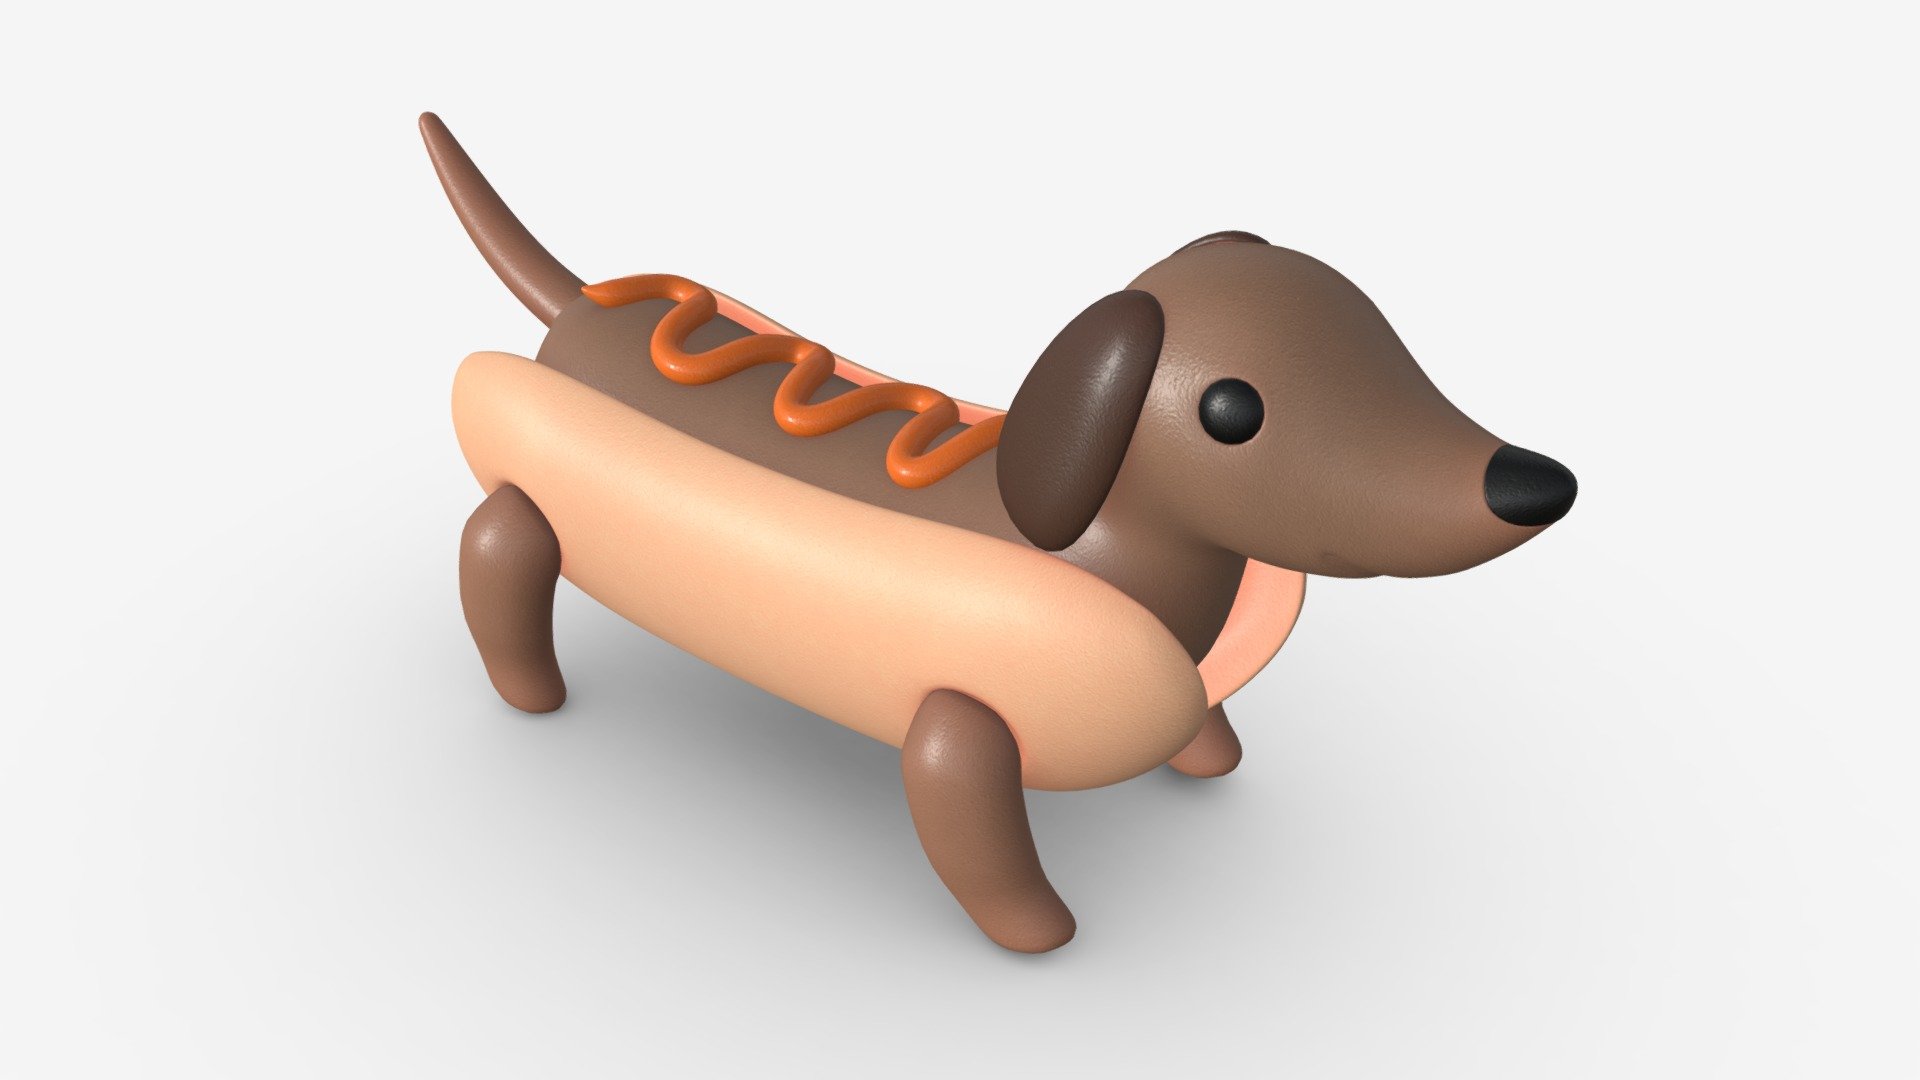 wiener dog in a hot dog bun